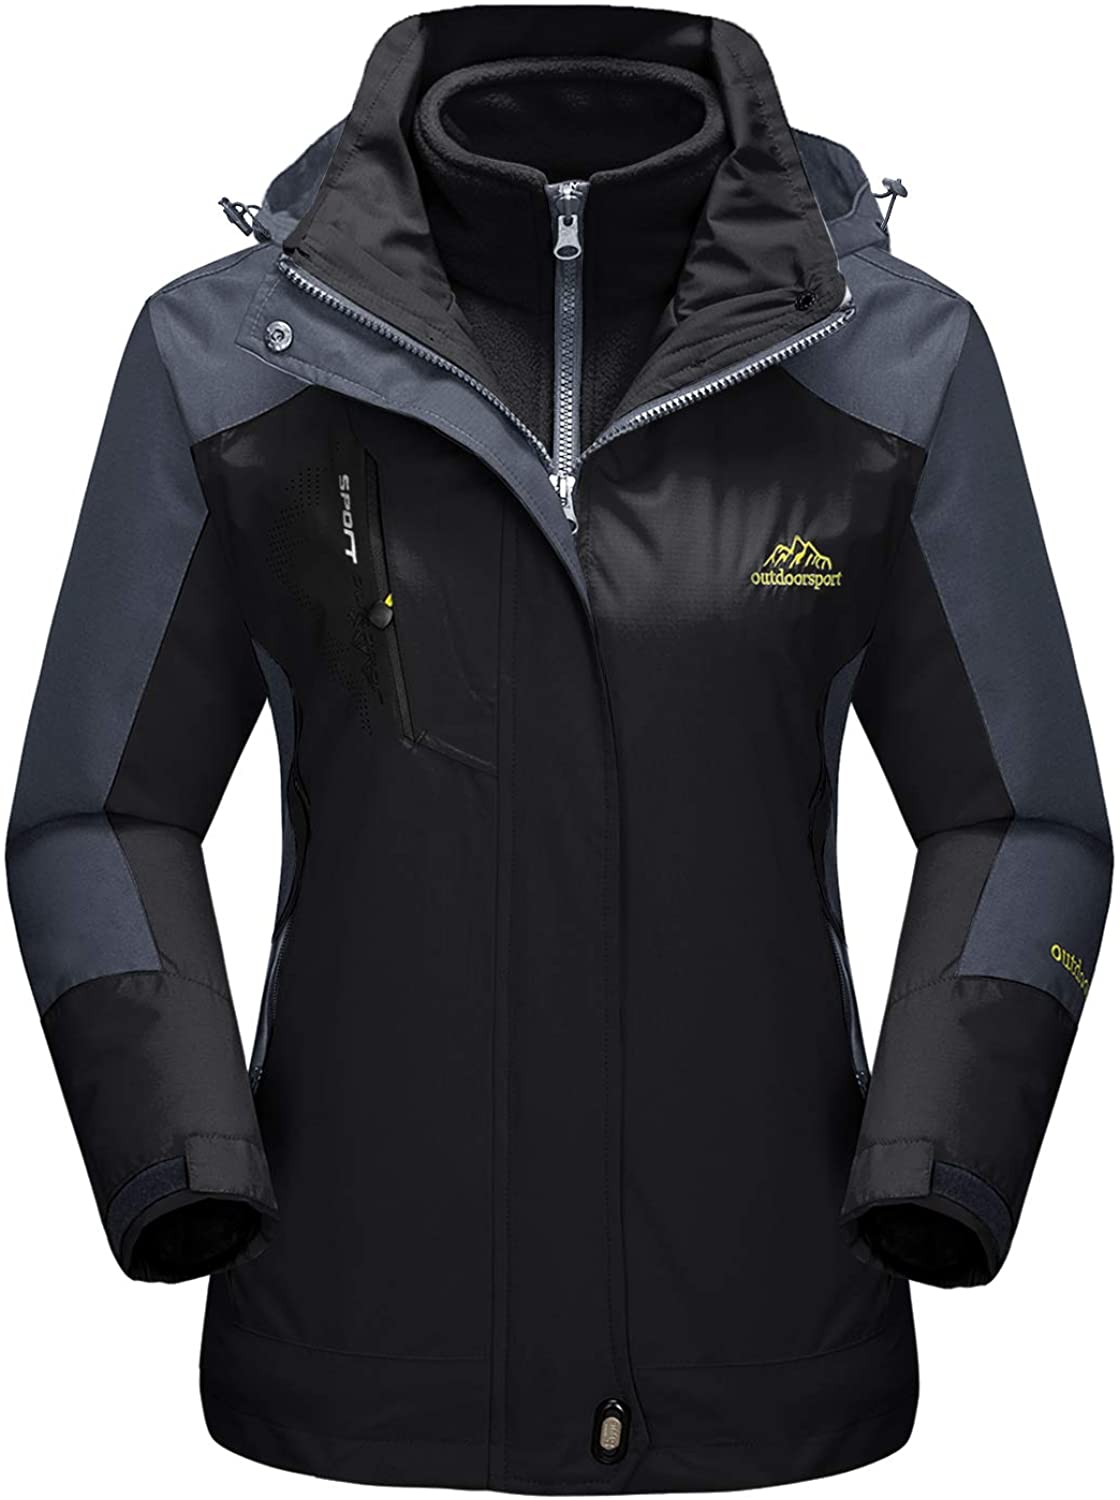 MAGCOMSEN Womens Hooded Winter Snow Ski Jacket 6 Pockets Waterproof Windproof Softshell Fleece Coat 